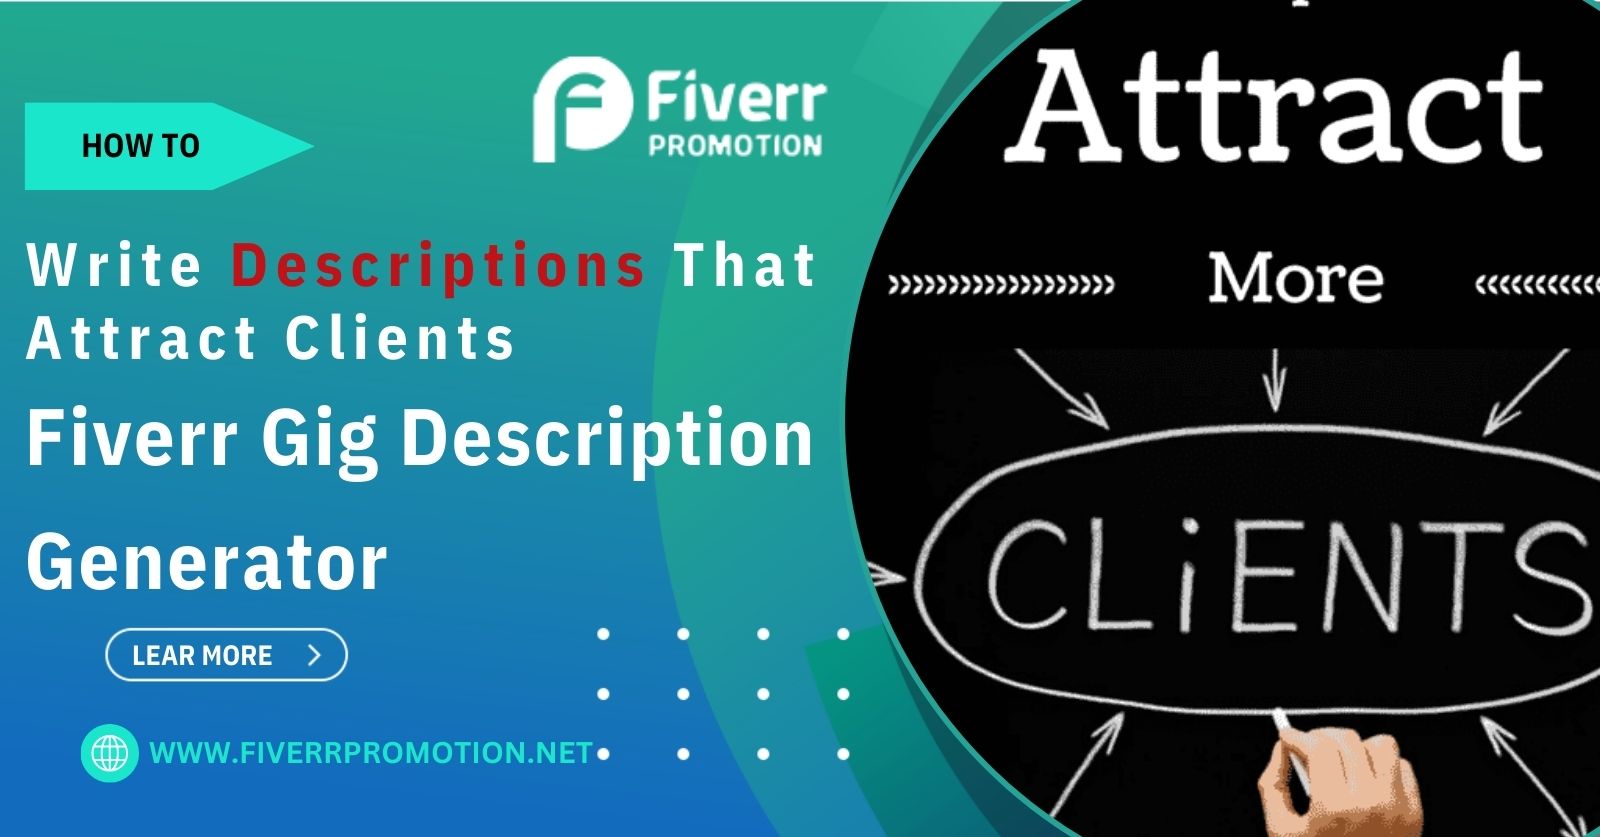 Fiverr Gig Description Generator: How to Write Descriptions That Attract Clients